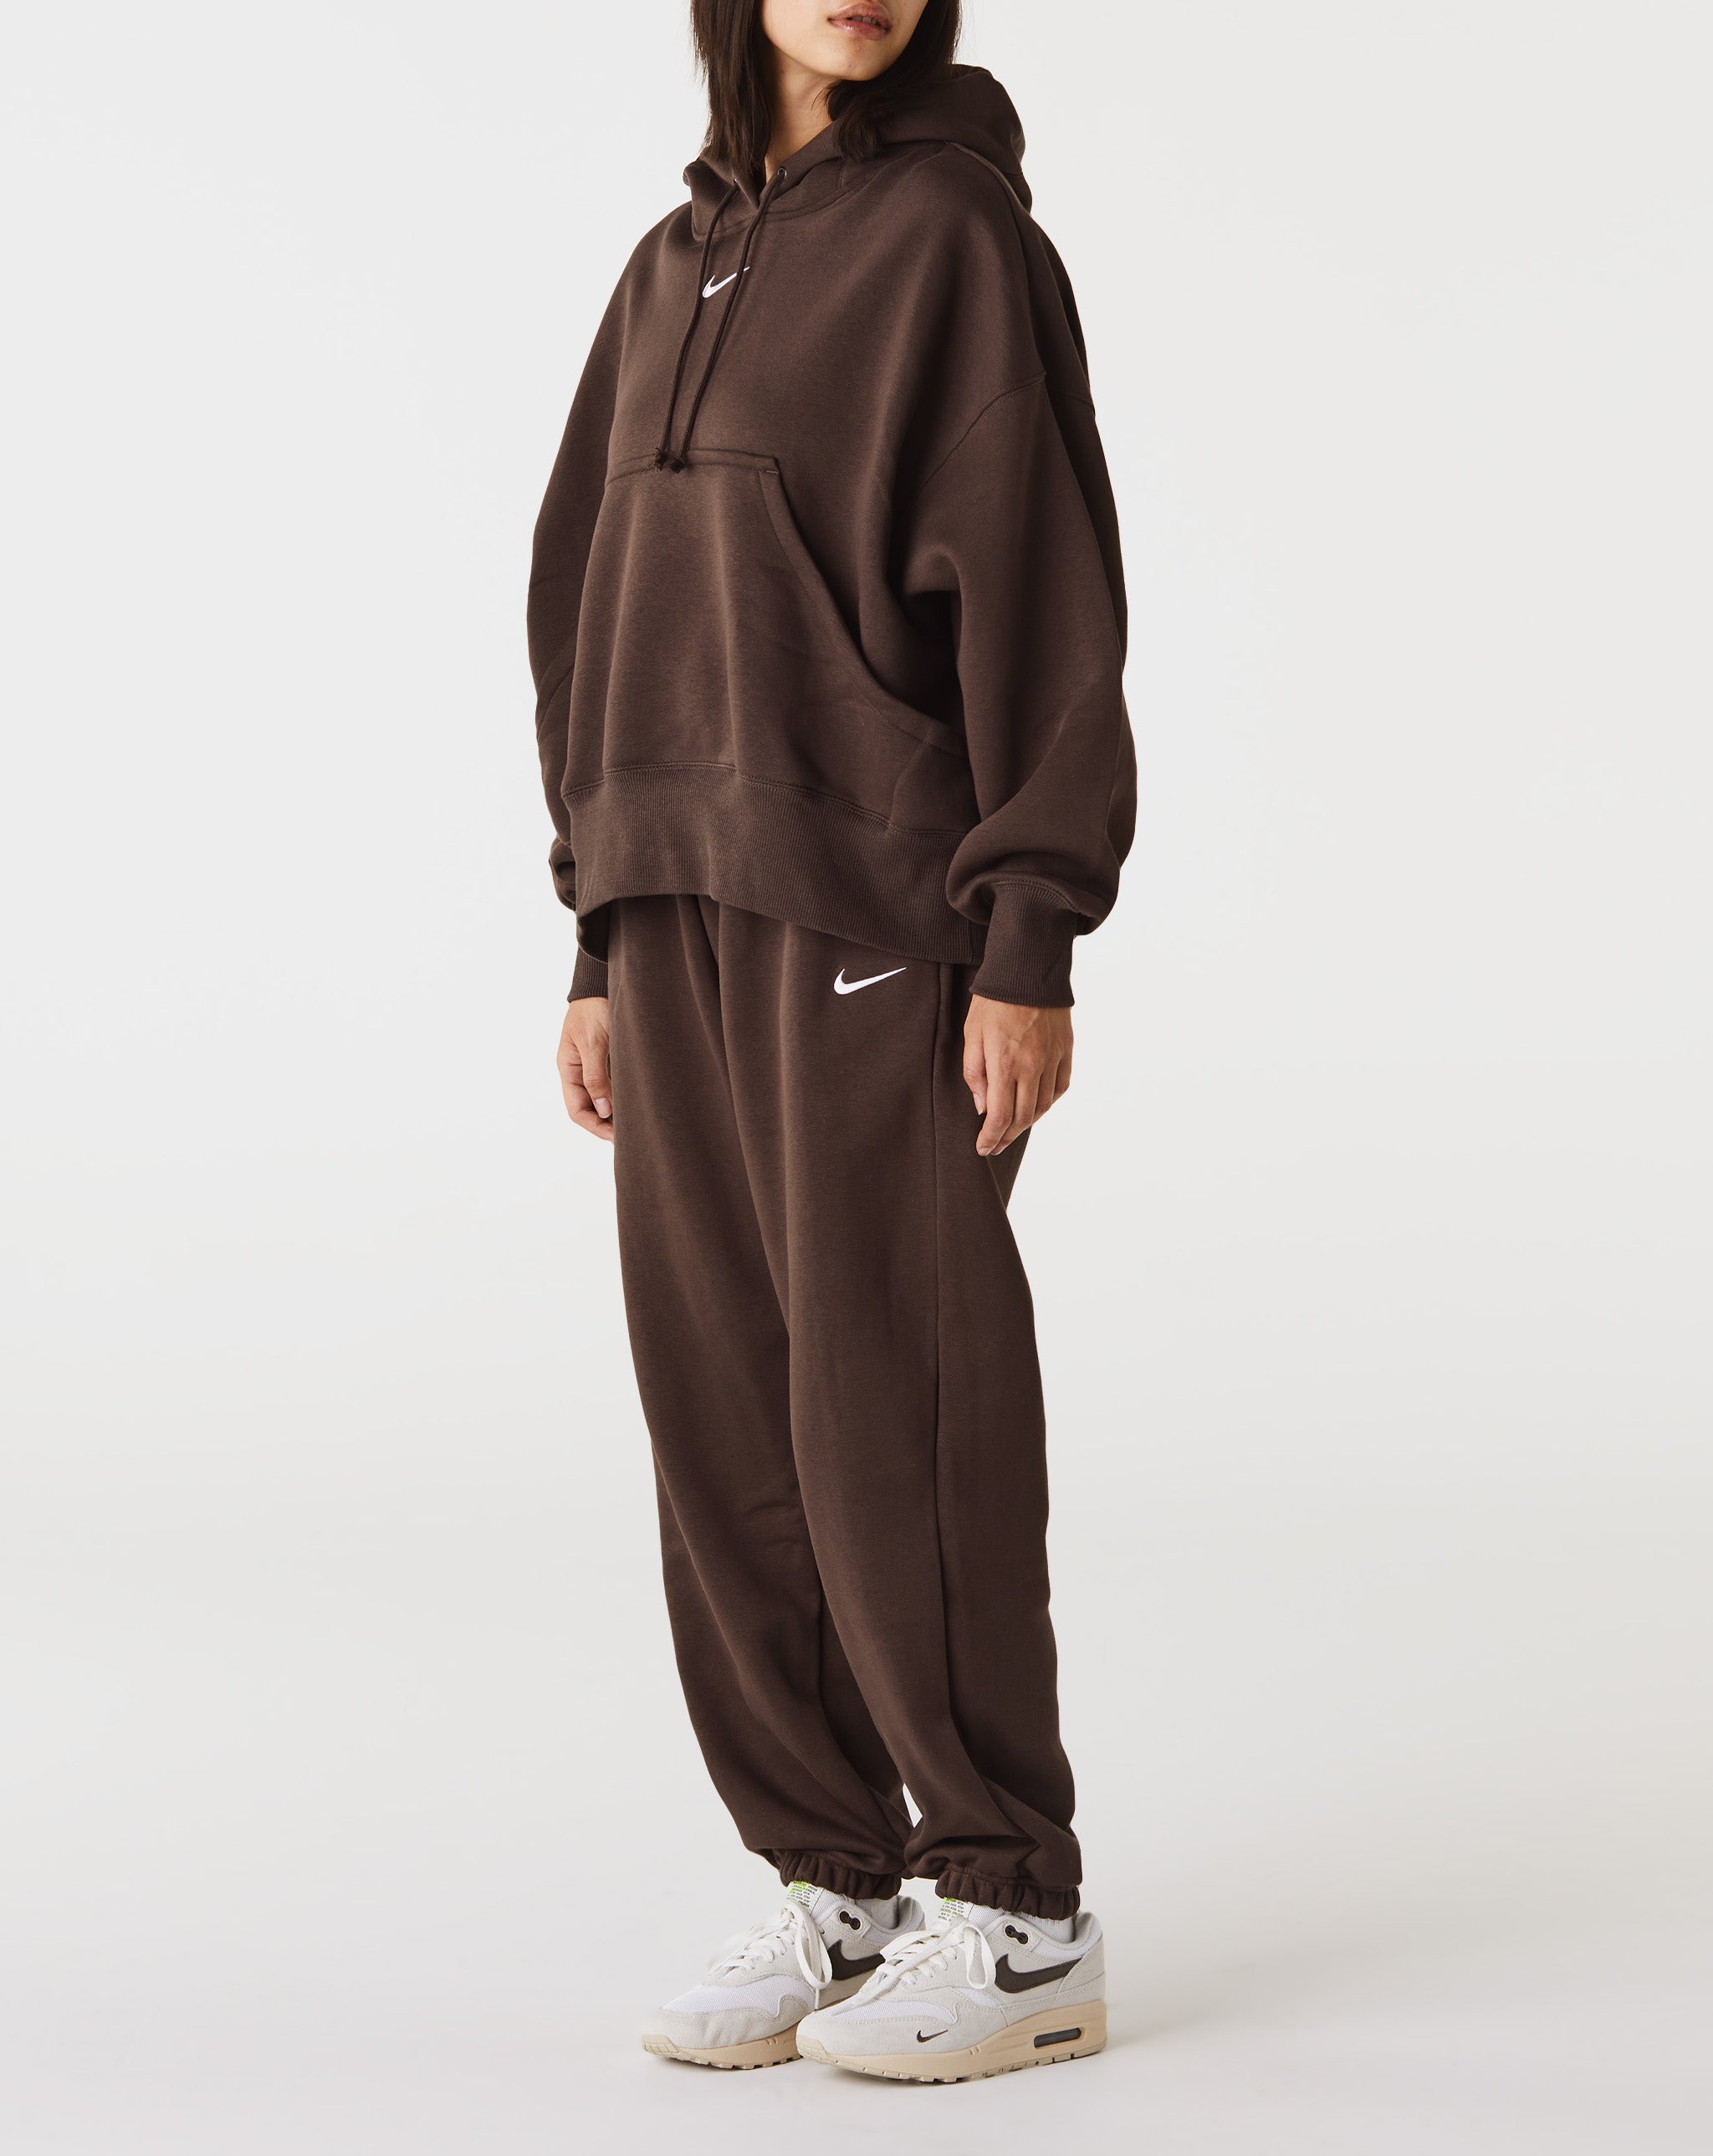 Nike Women's Phoenix Fleece High-Waisted Oversized Sweatpants - Rule of Next Apparel